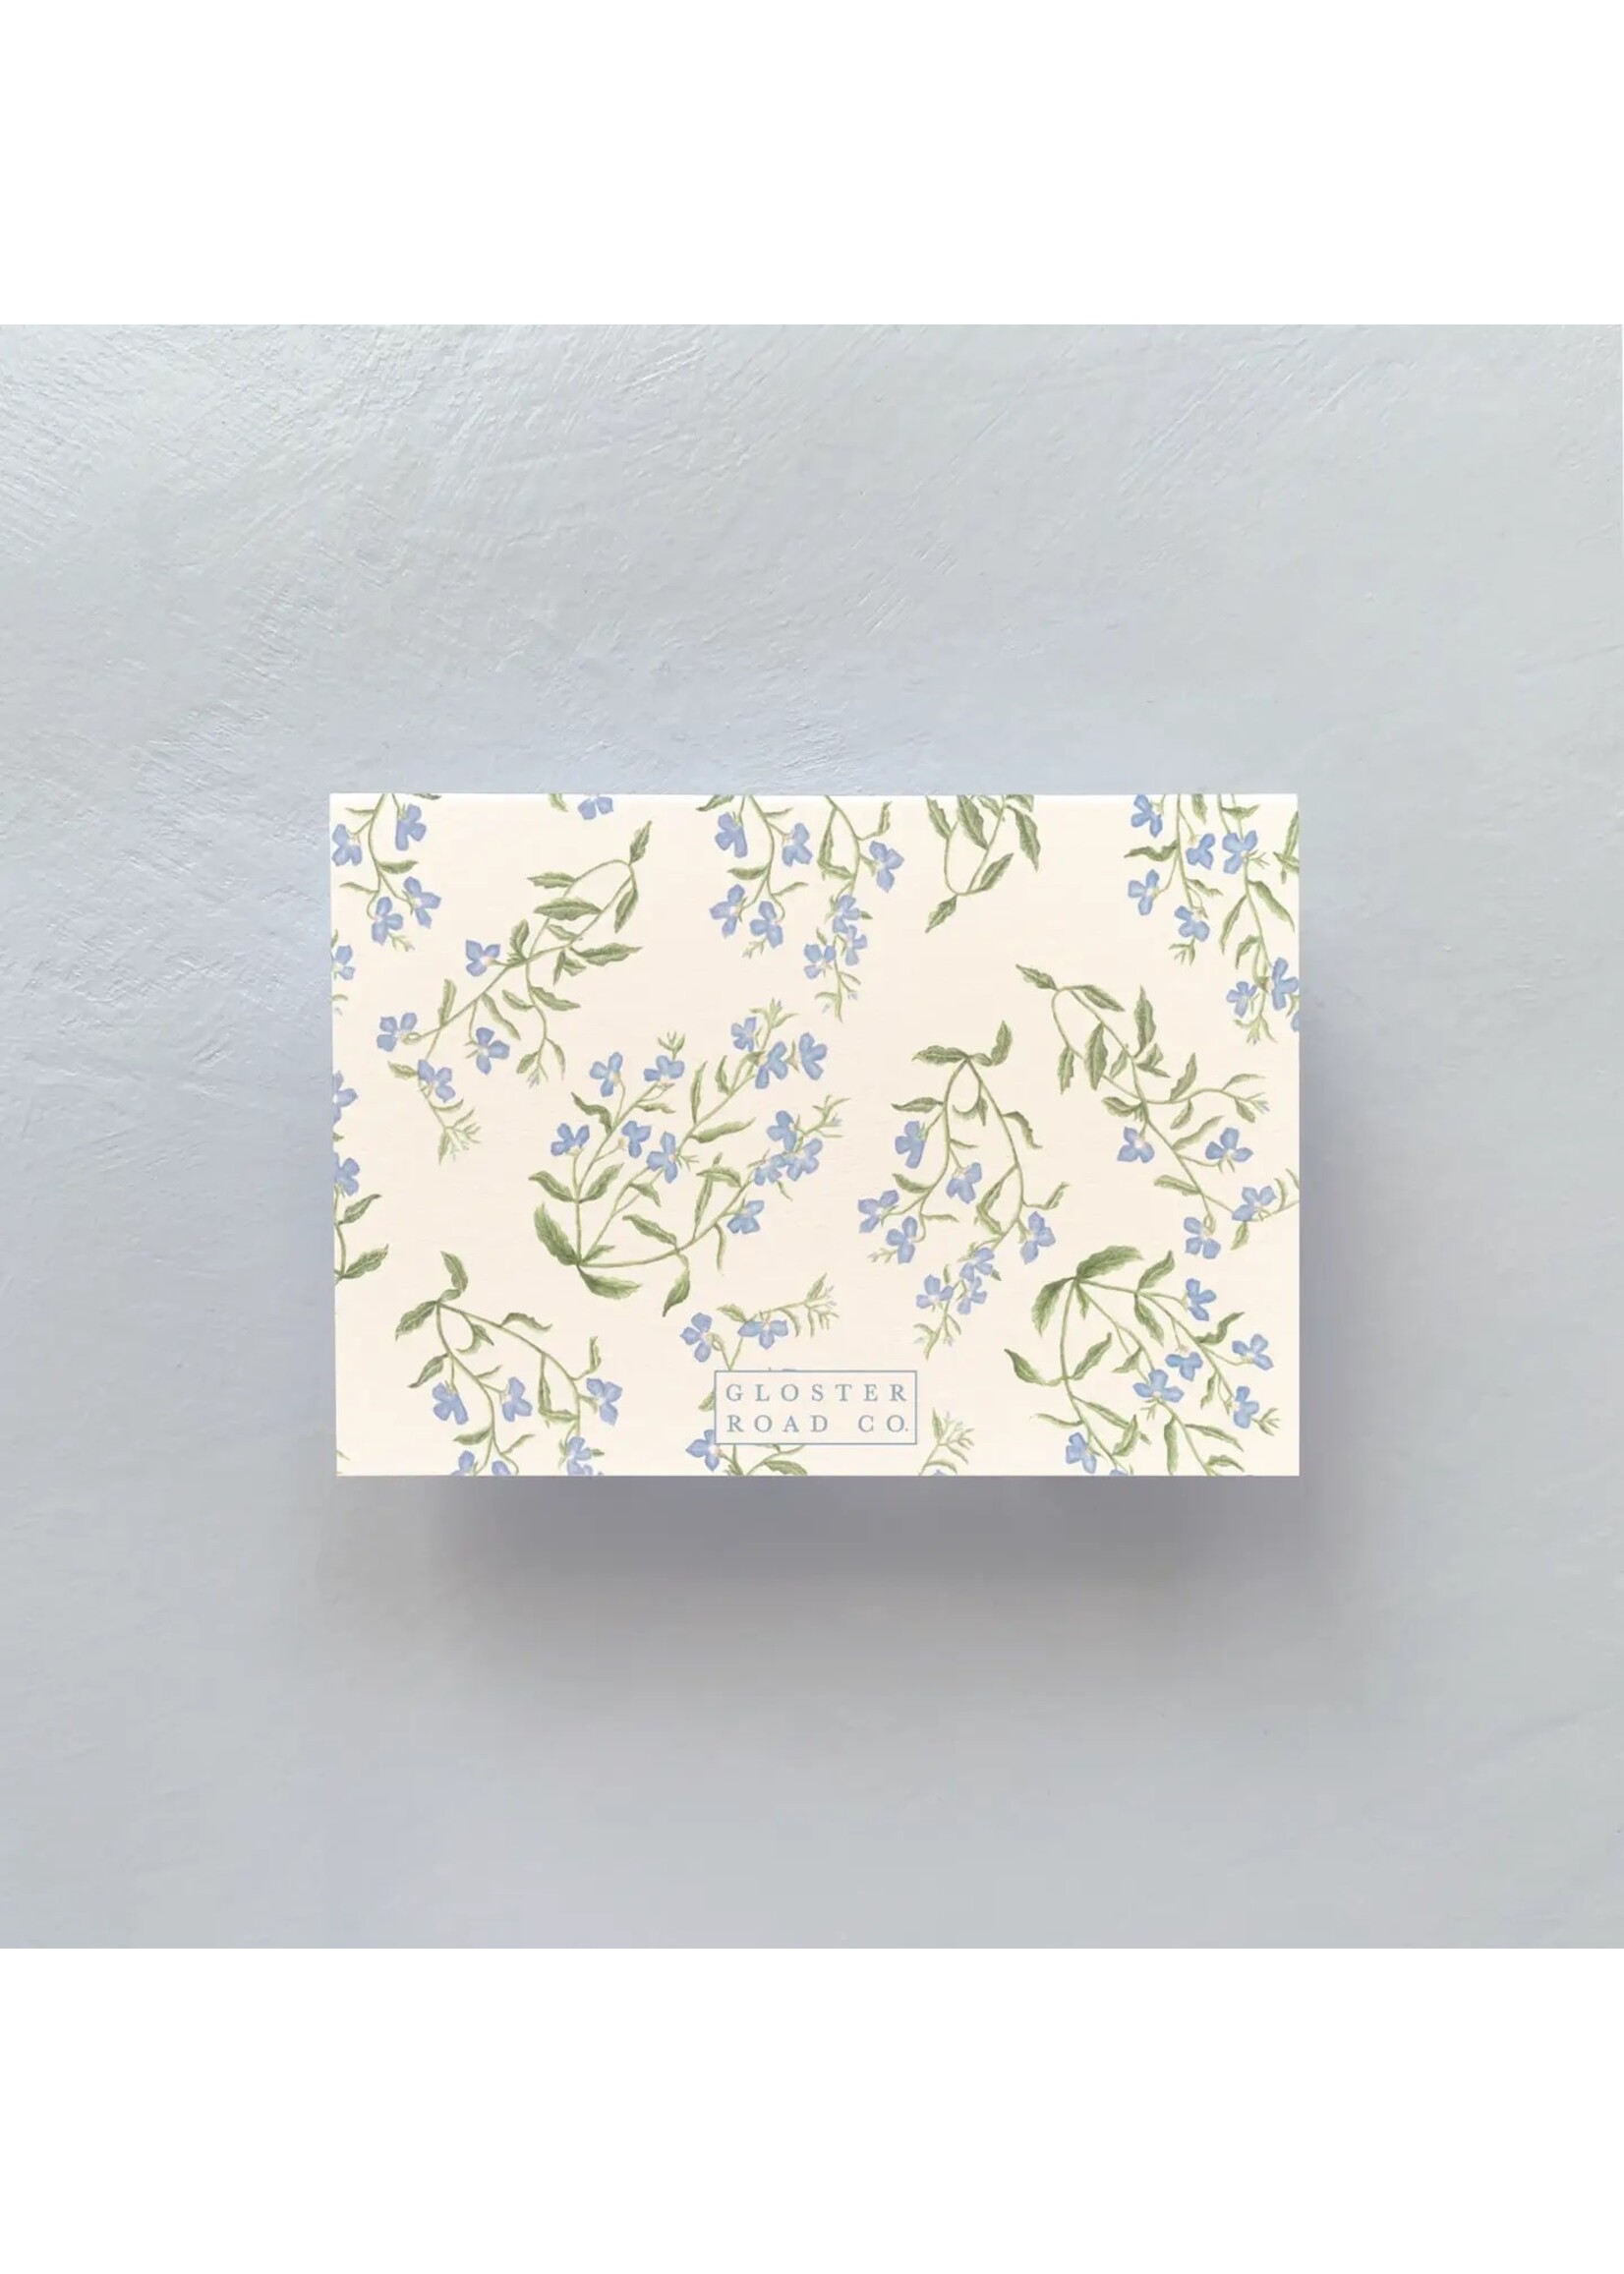 Notecard Set Mini - Lobelia Blooms